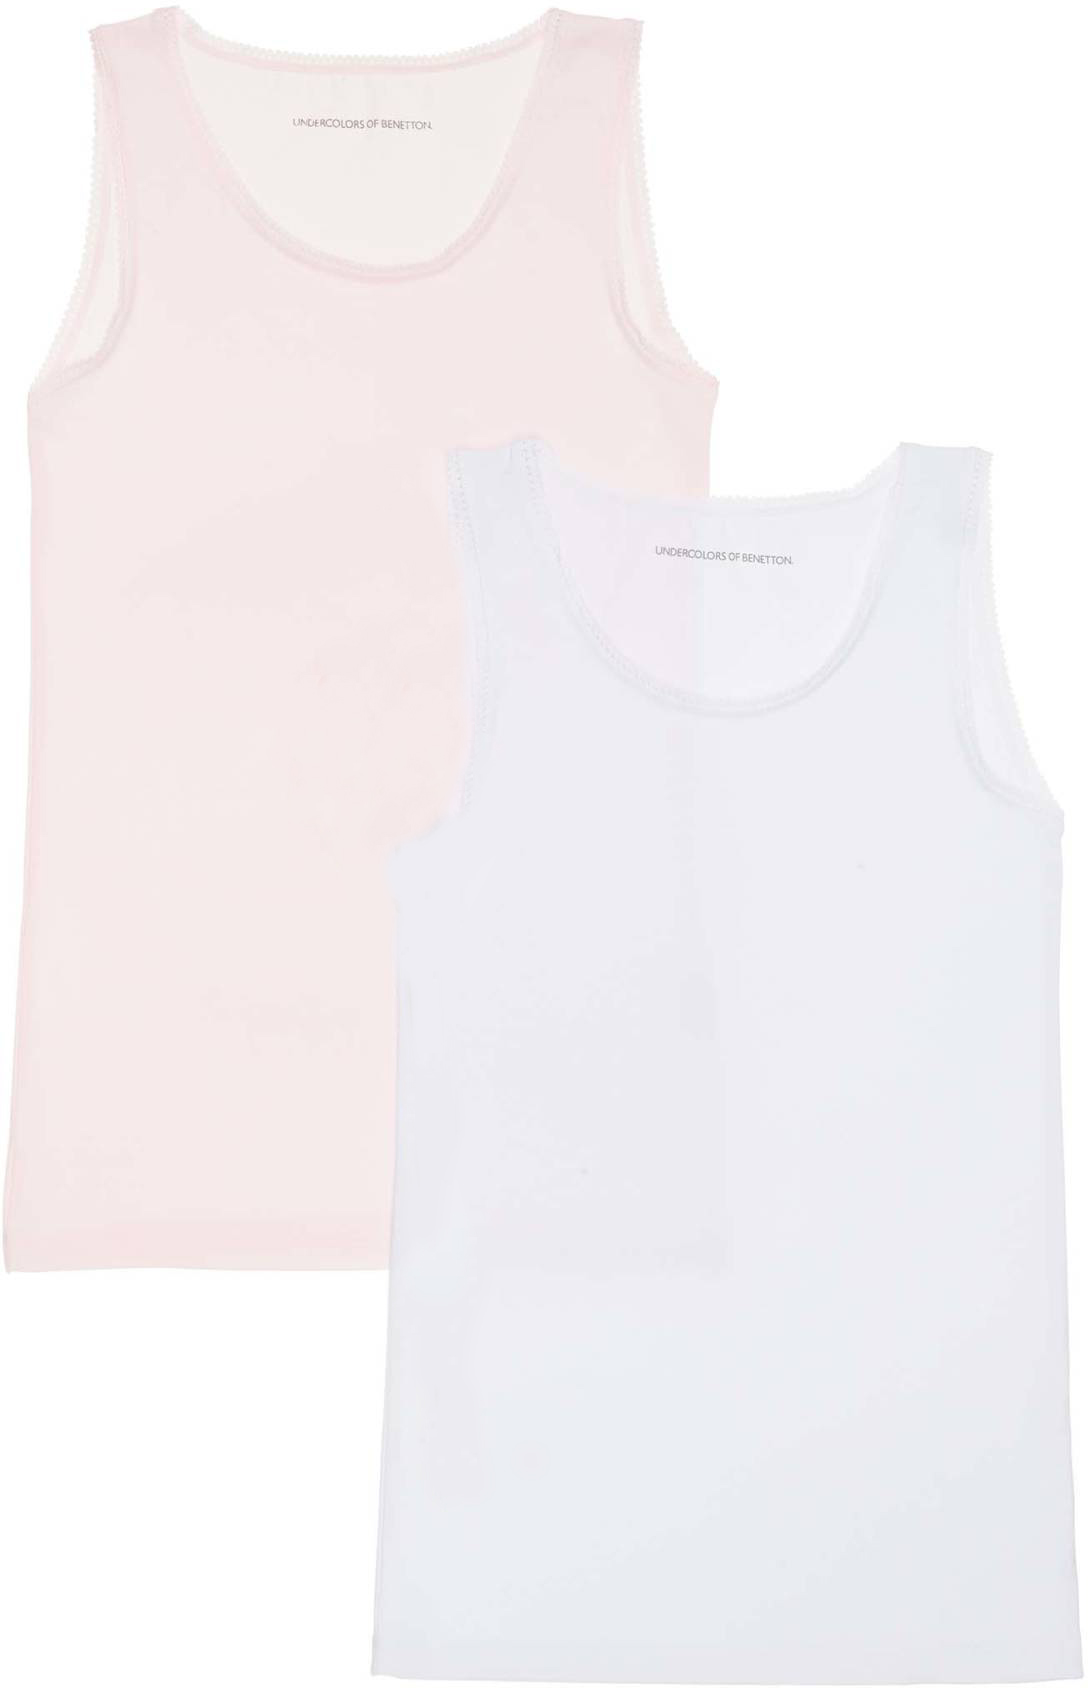 Майка для девочки United Colors of Benetton, цвет: белый, розовый, 2 шт. 3MC10H480_901. Размер 130